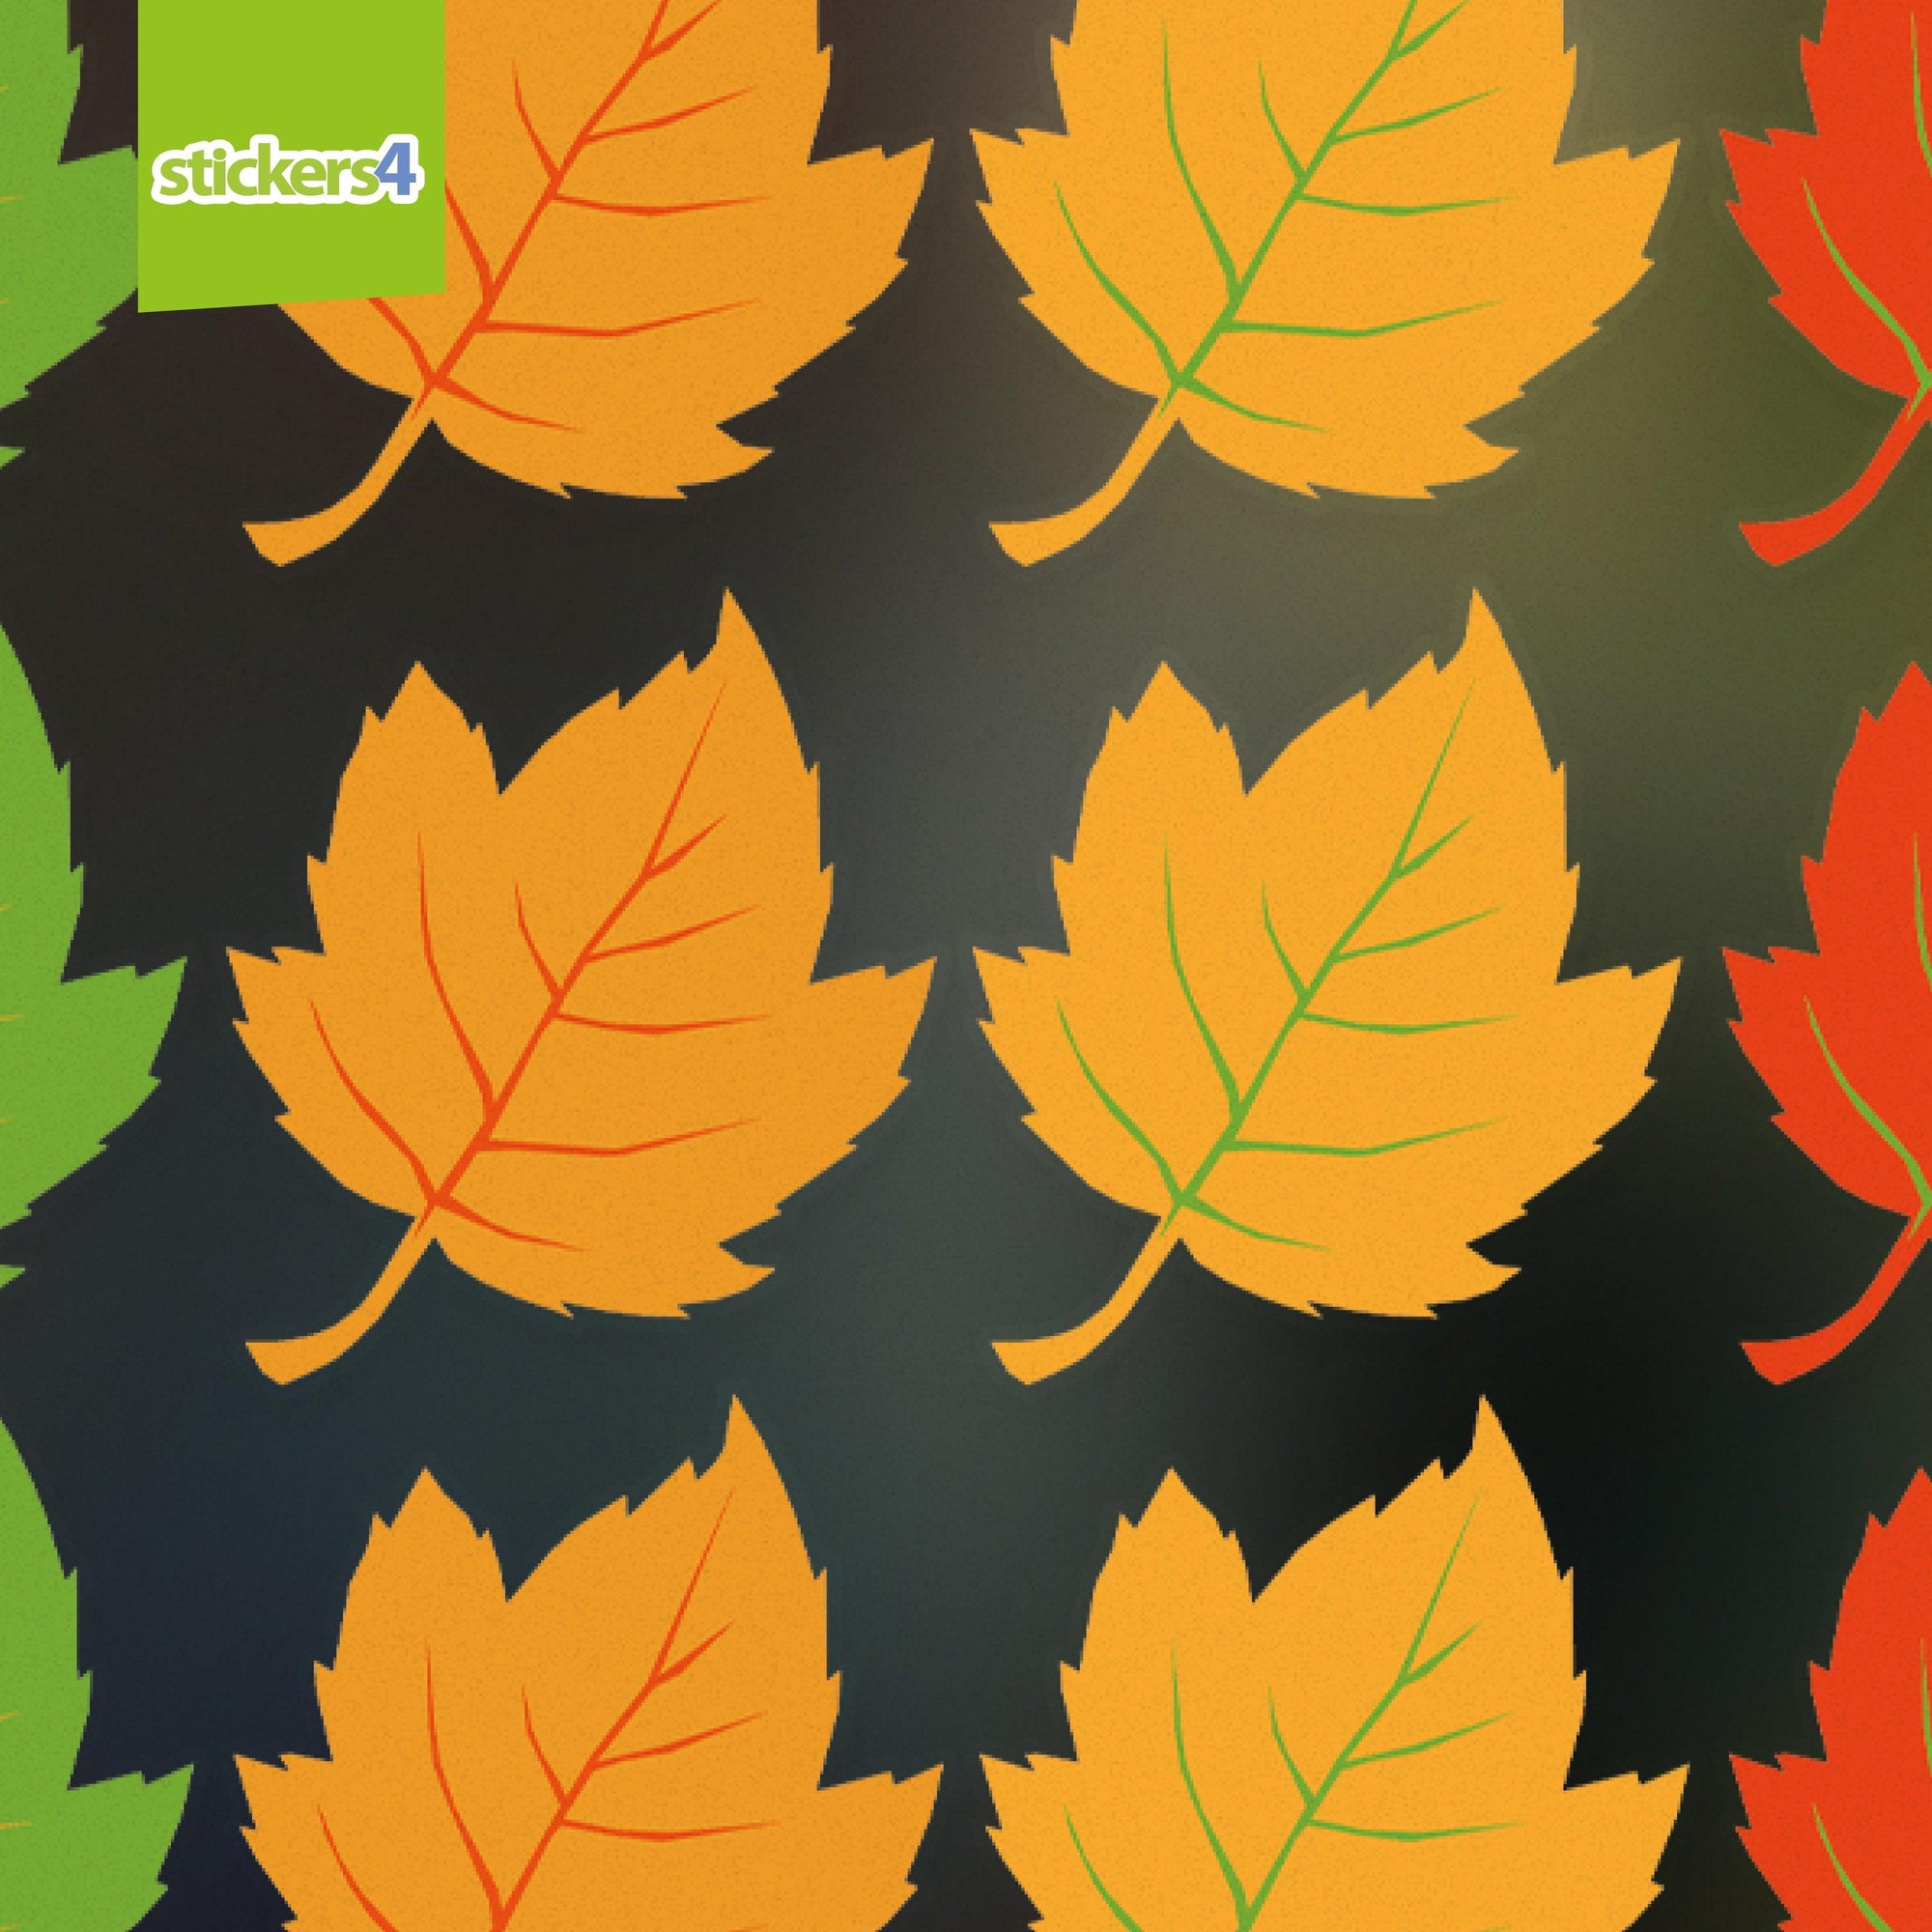 Standard Autumn Leaves Window Stickers - Pack 1 Autumn Window Display